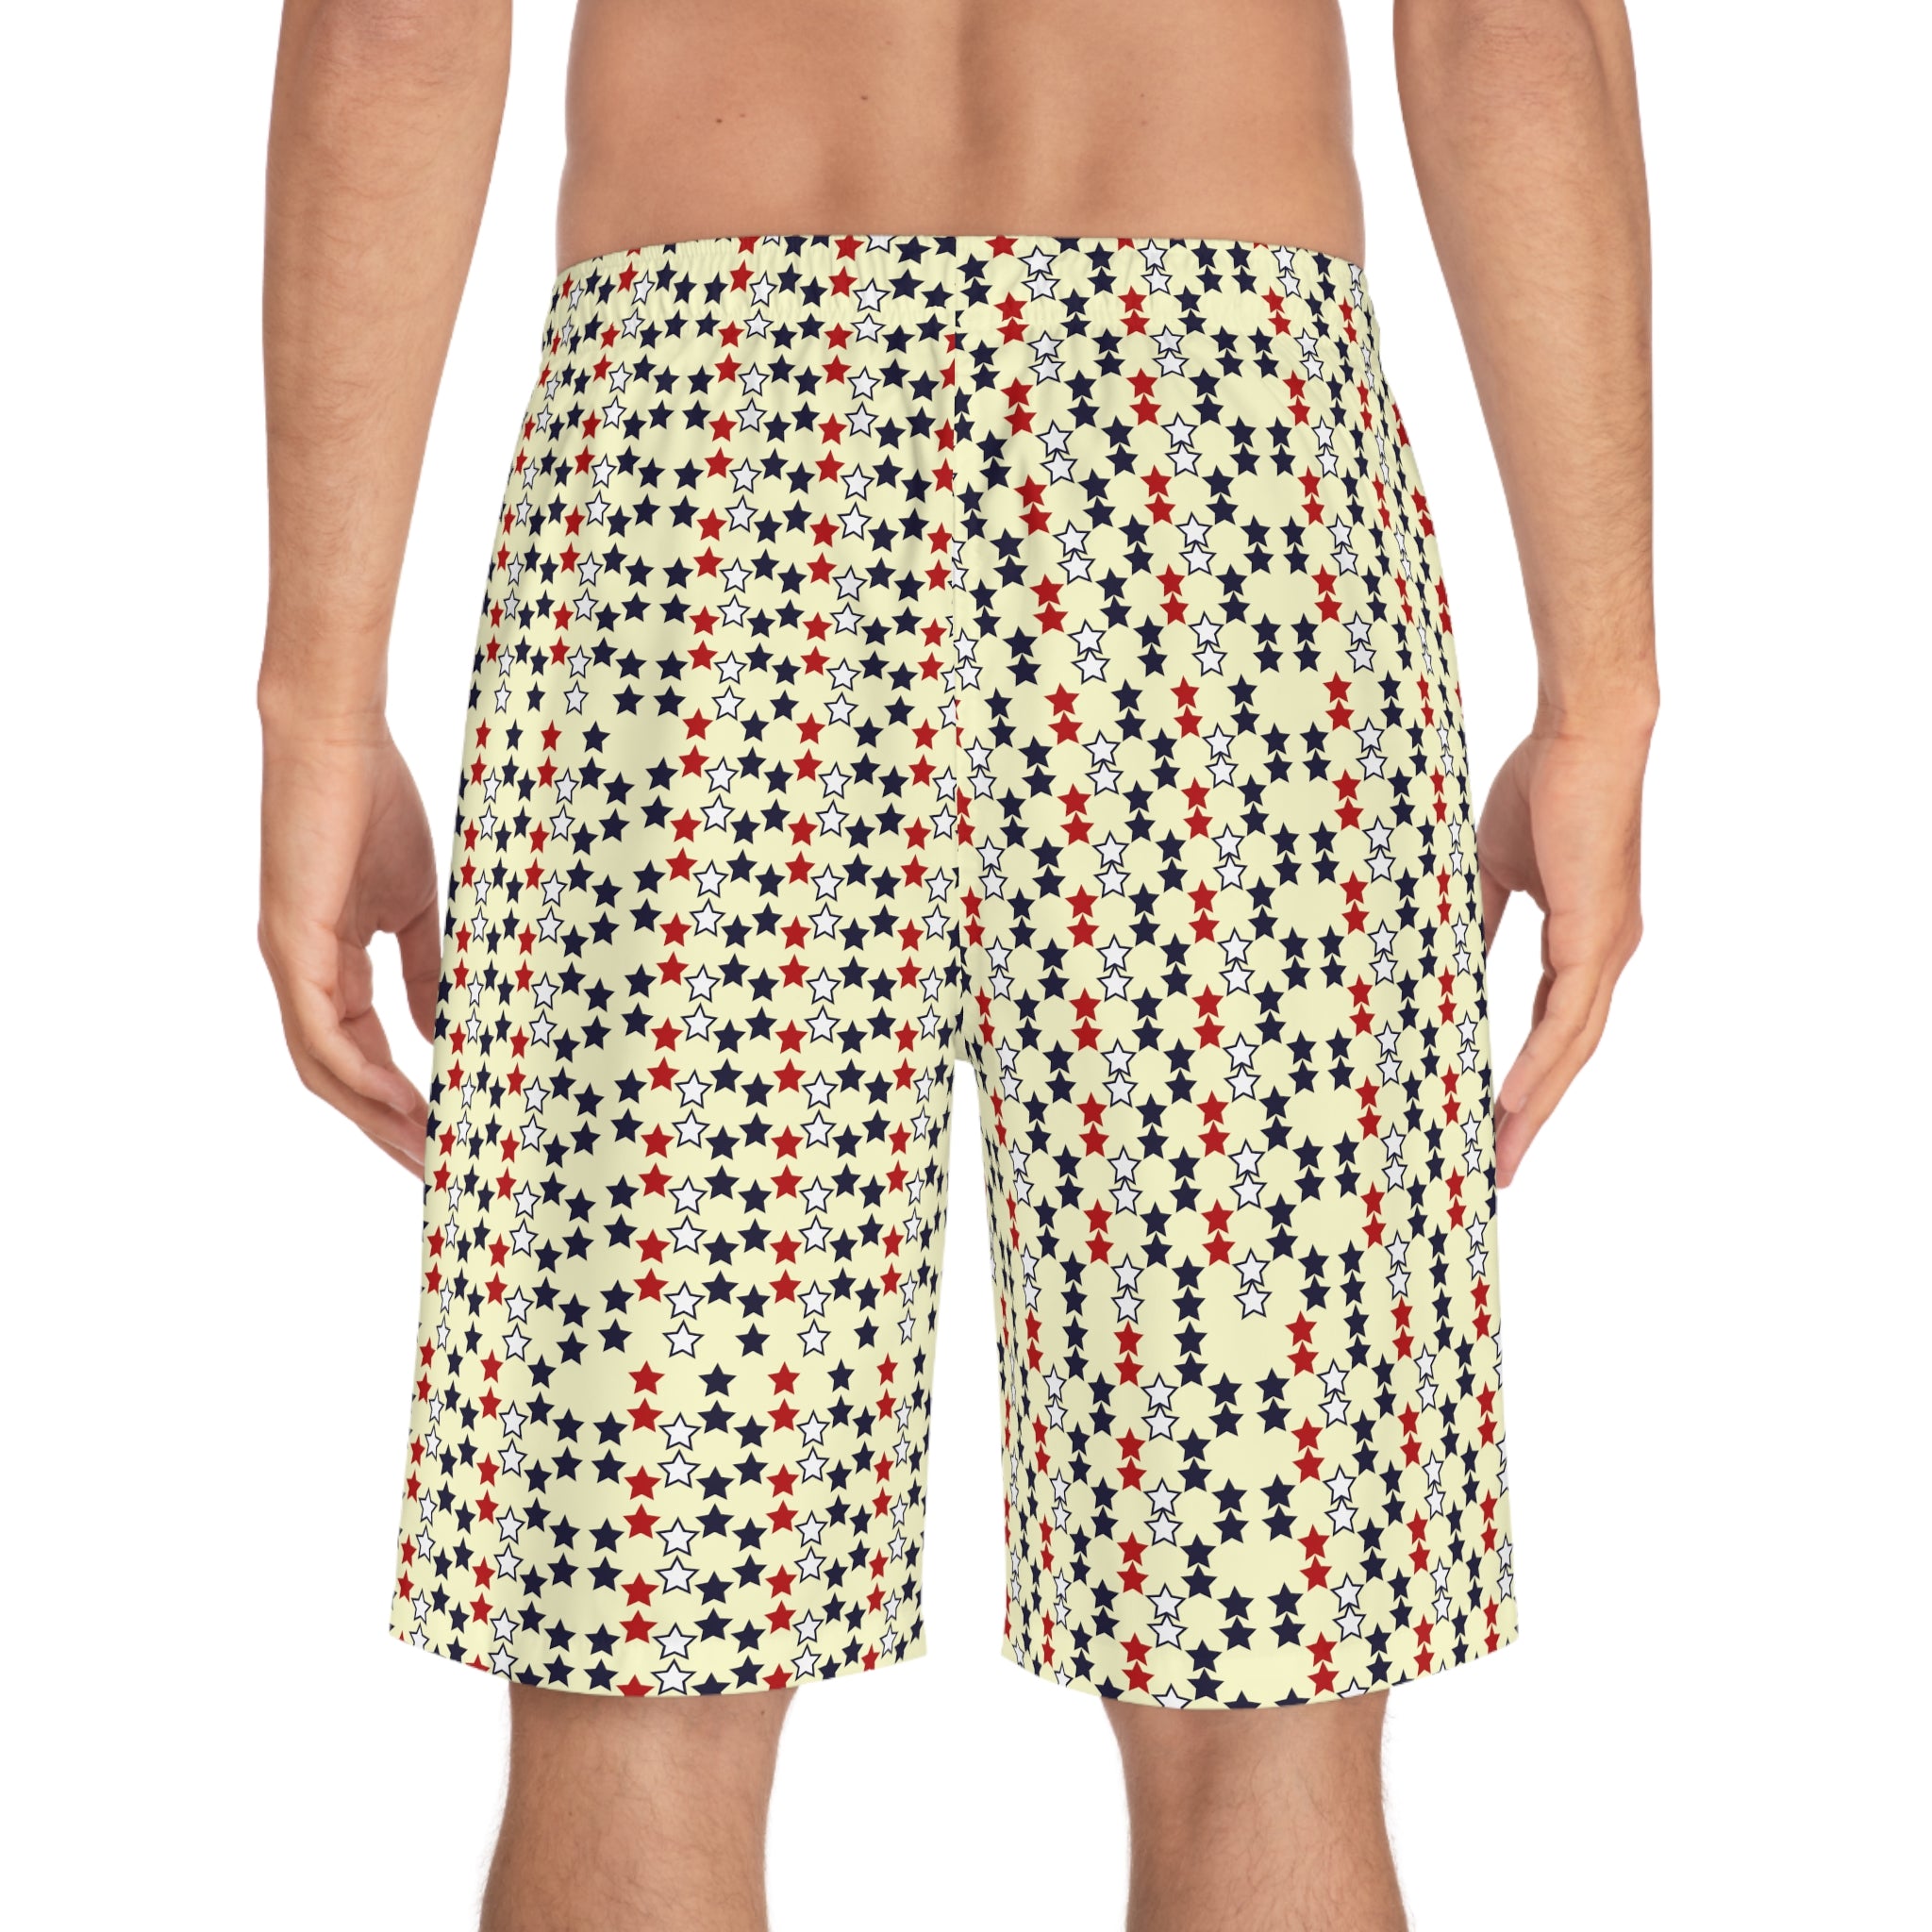 cream star print board shorts for men